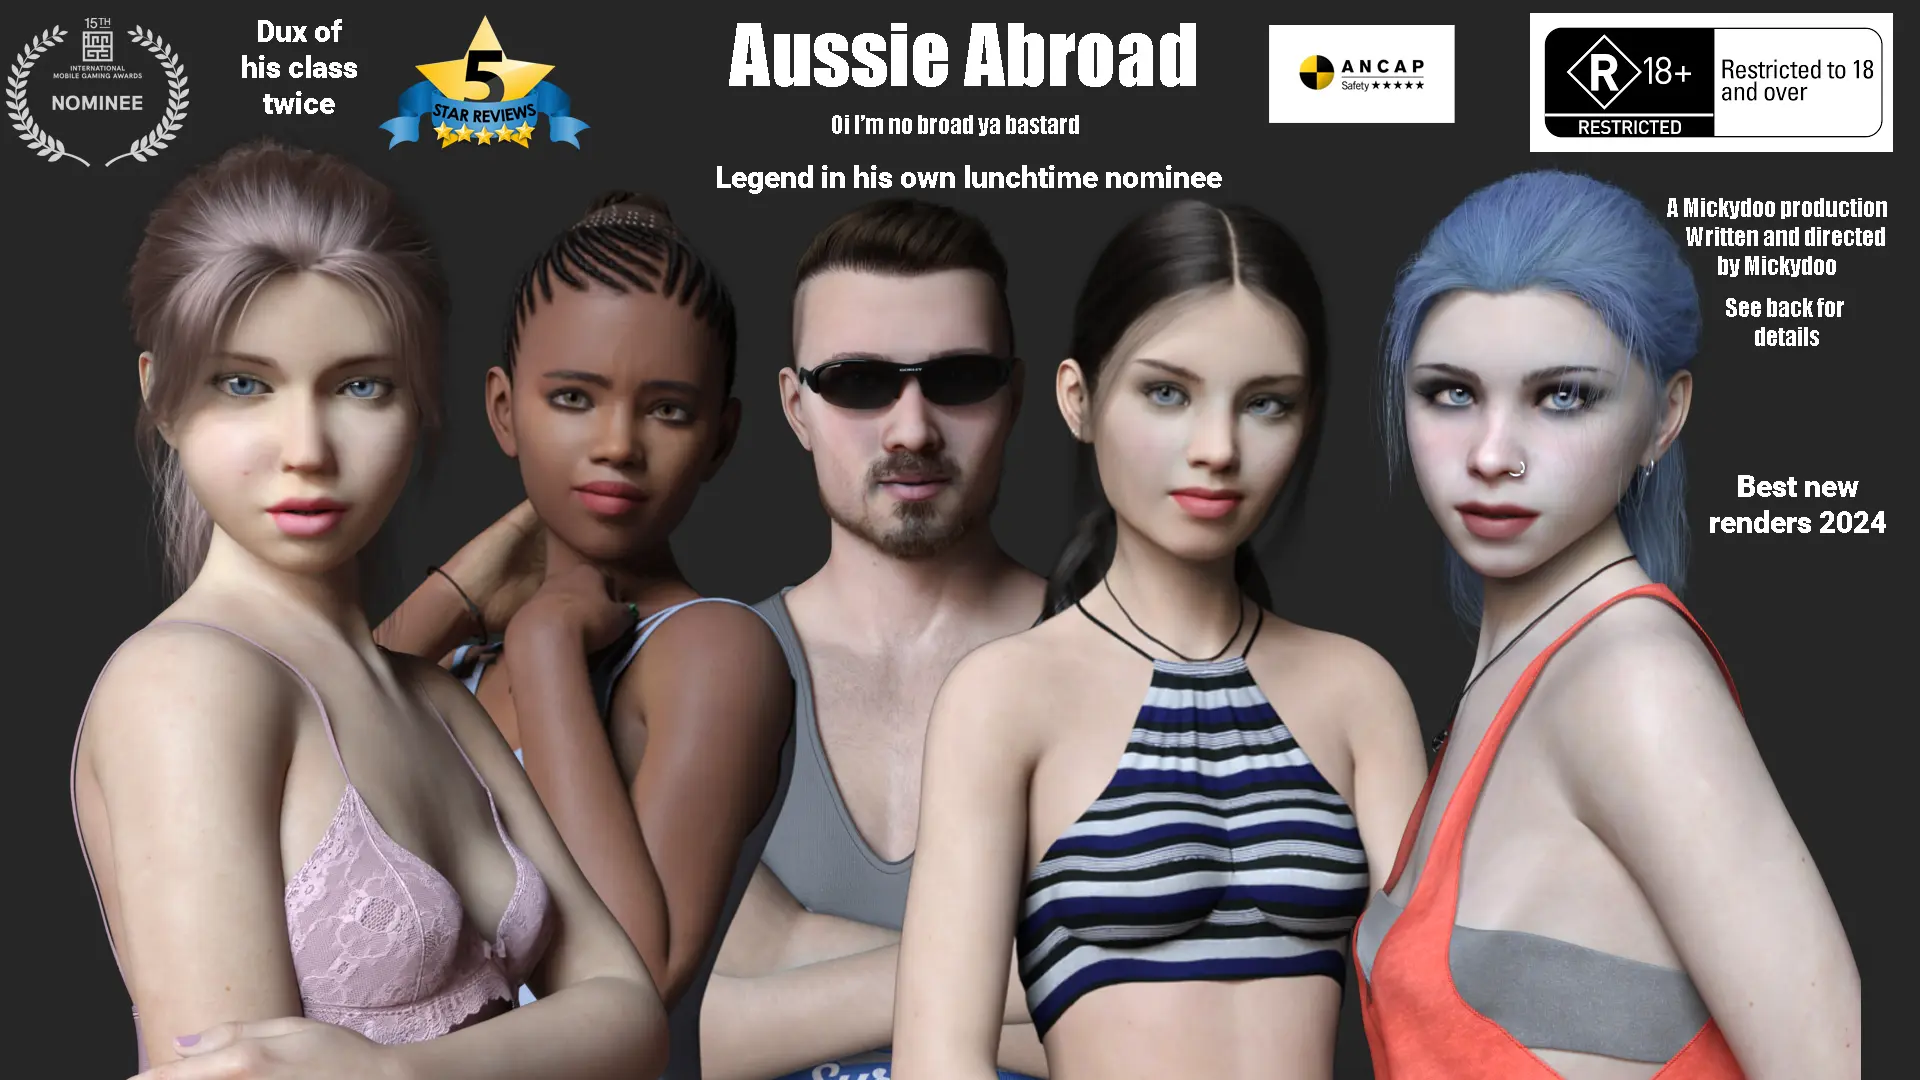 An Aussie Abroad main image